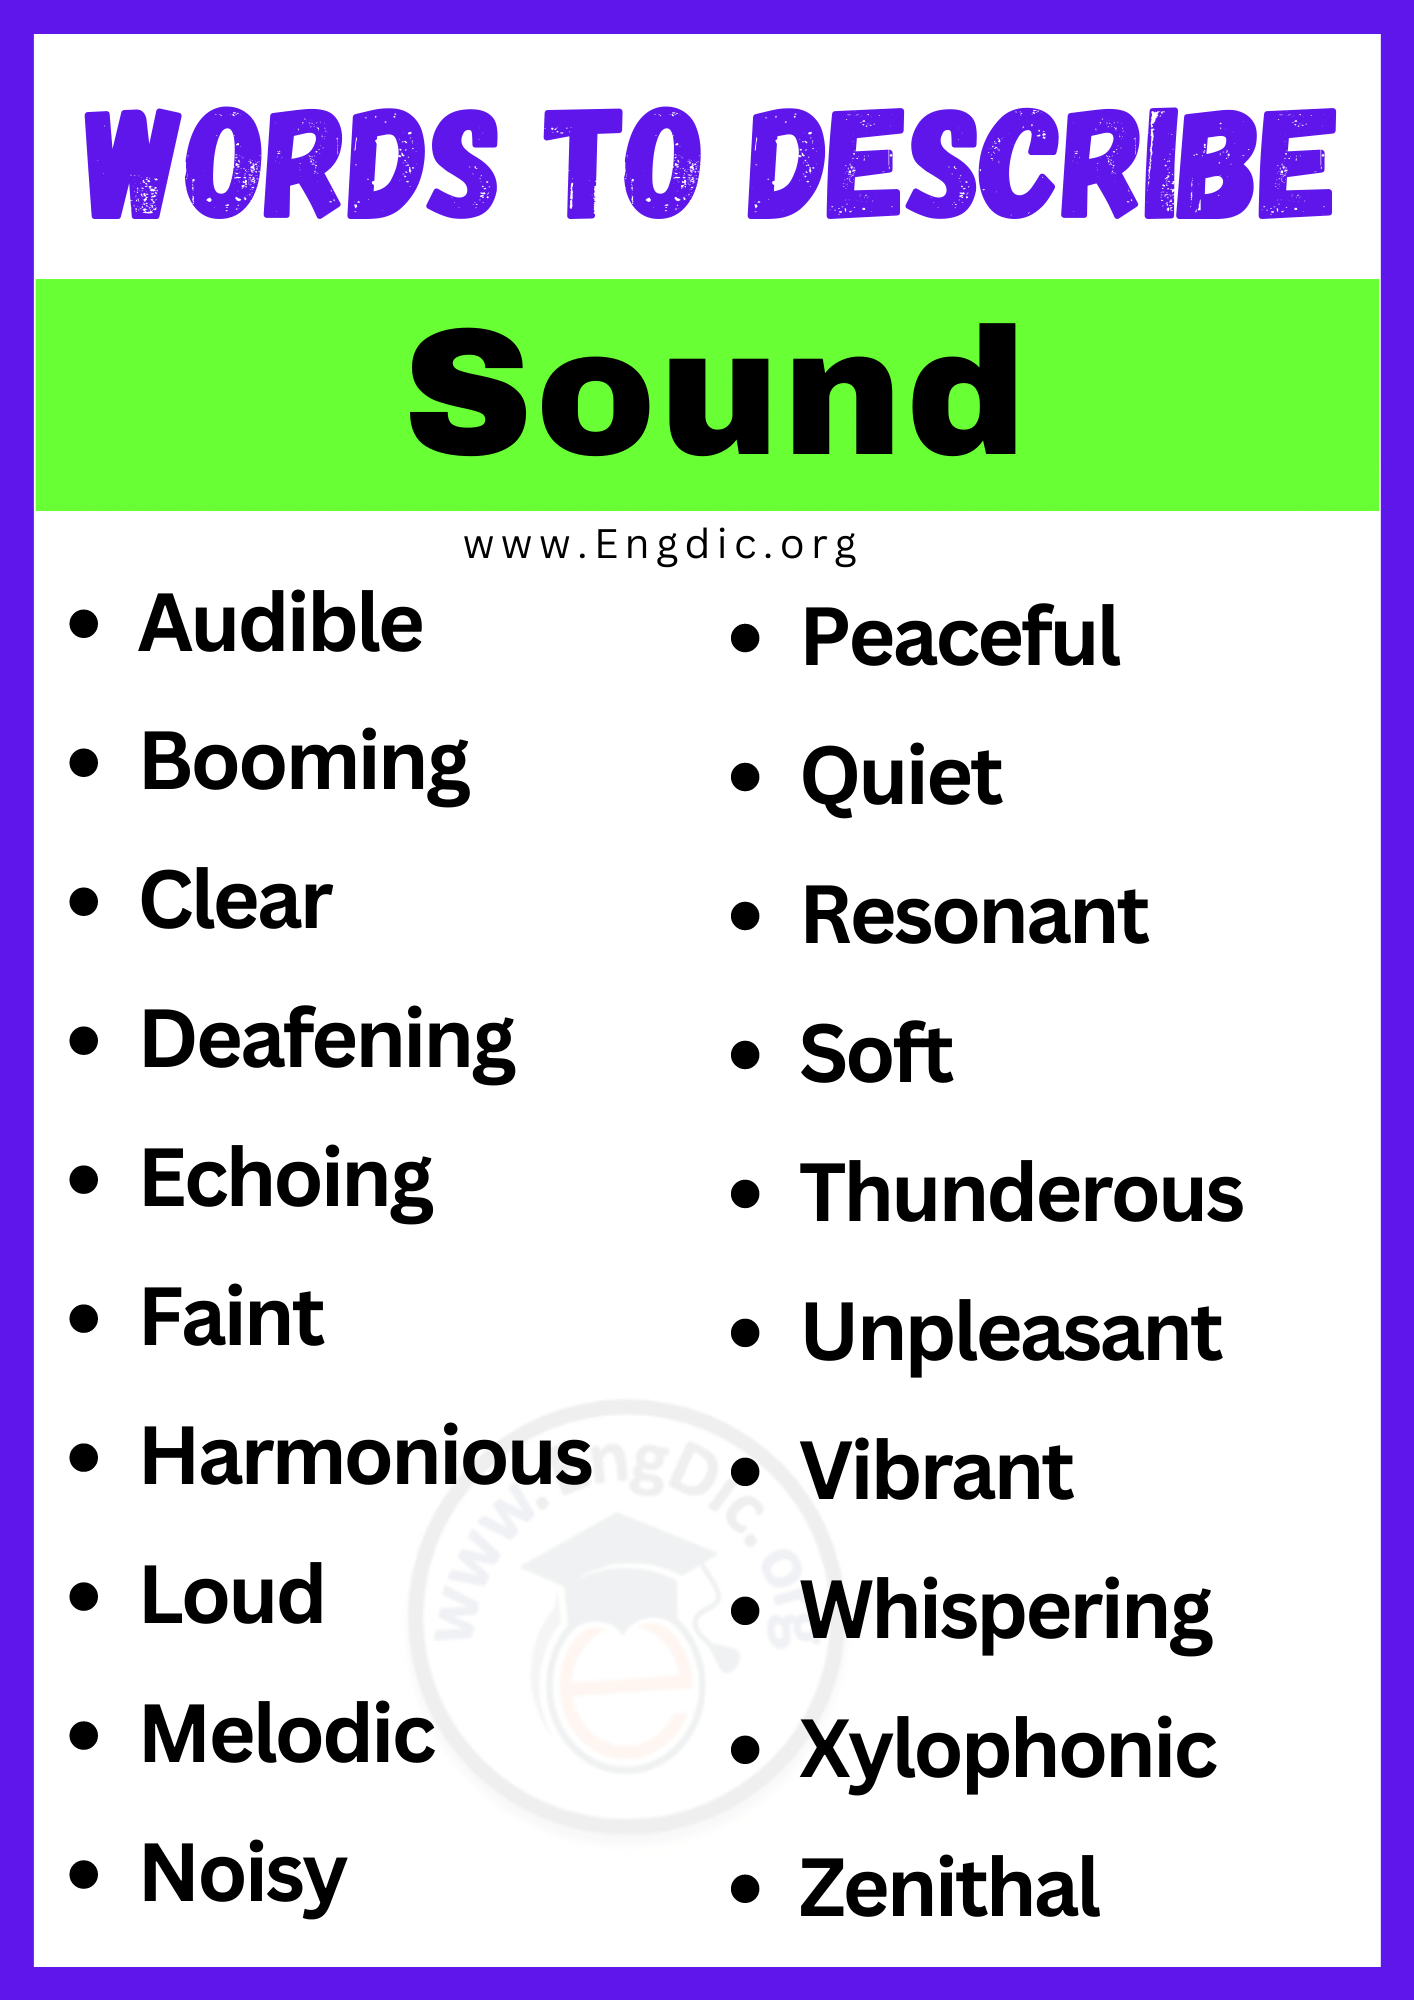 Words to Describe Sound